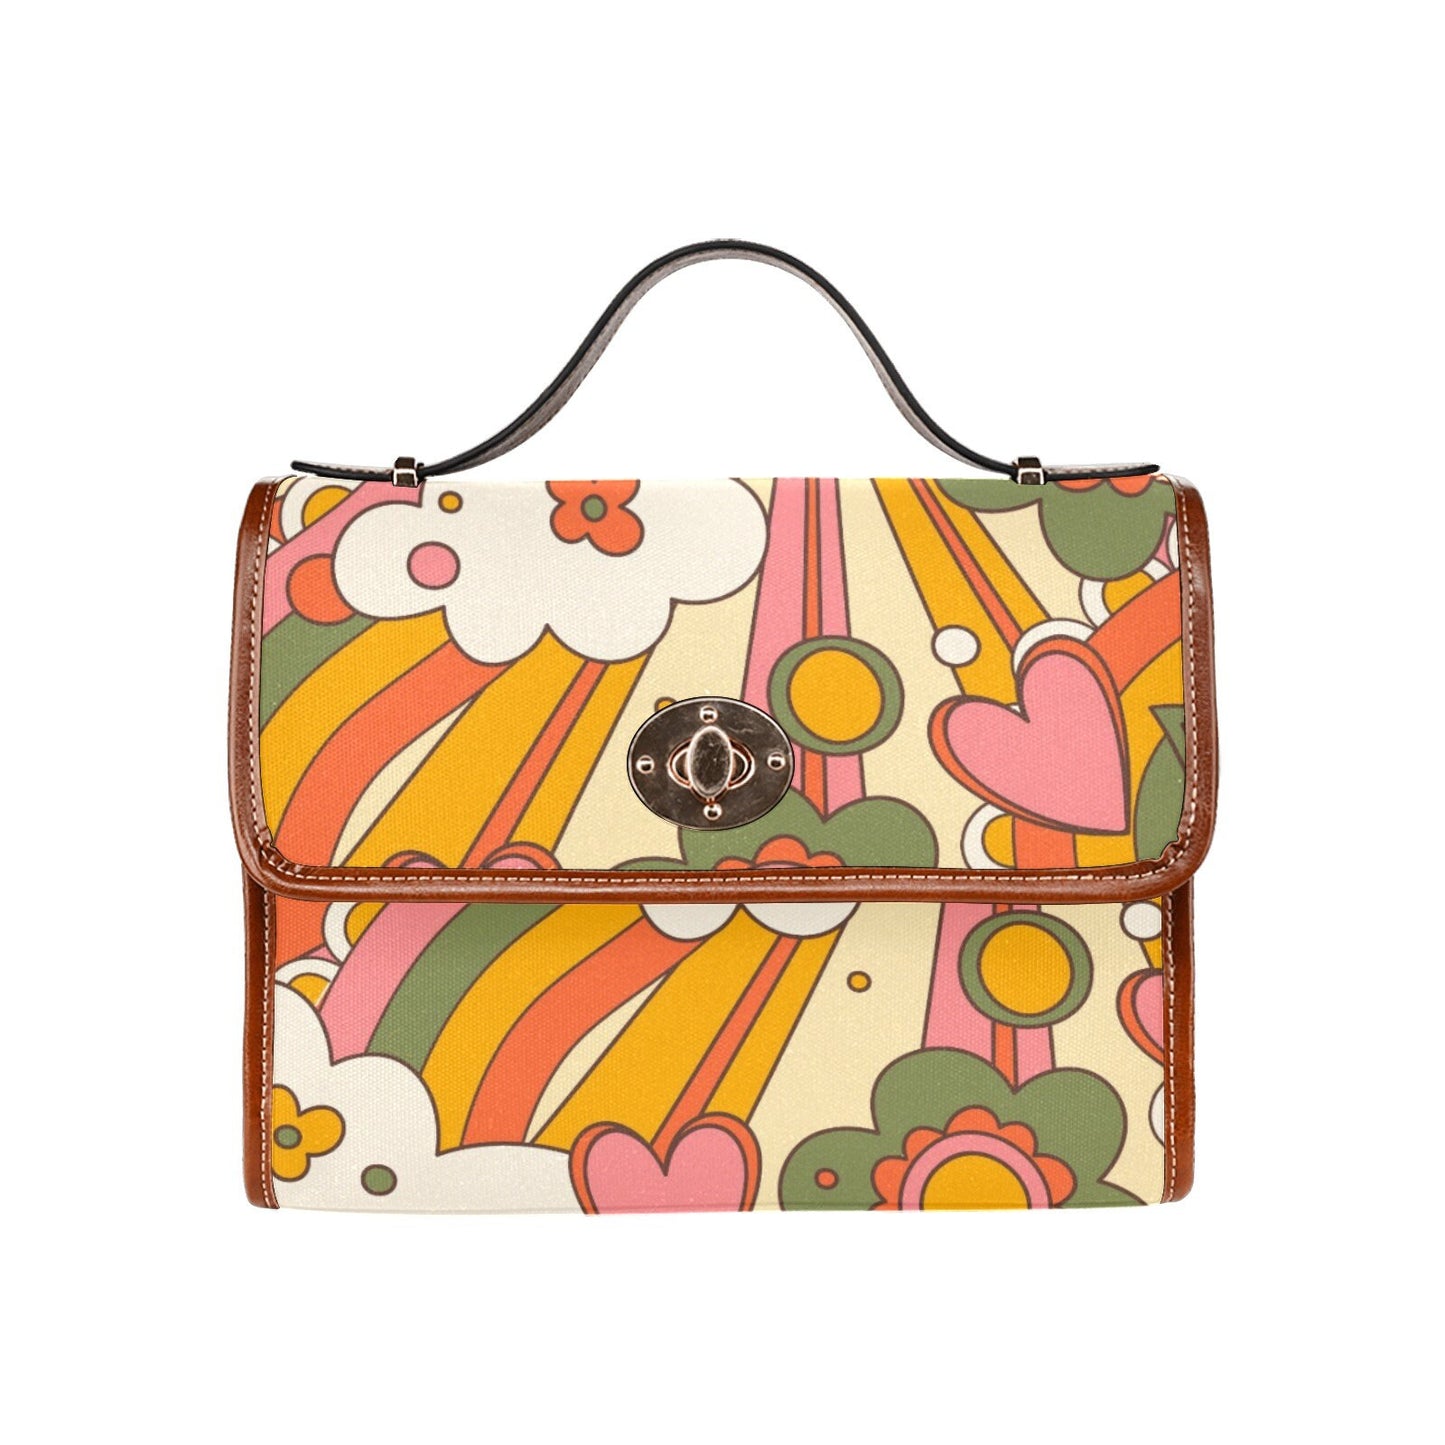 Women's Handbag, Women's Purse, Hippie Style Bag, Small handbag, Women's Bag, Retro Handbag, Retro Bag, Kawaii Bag, Multicolor Handbag